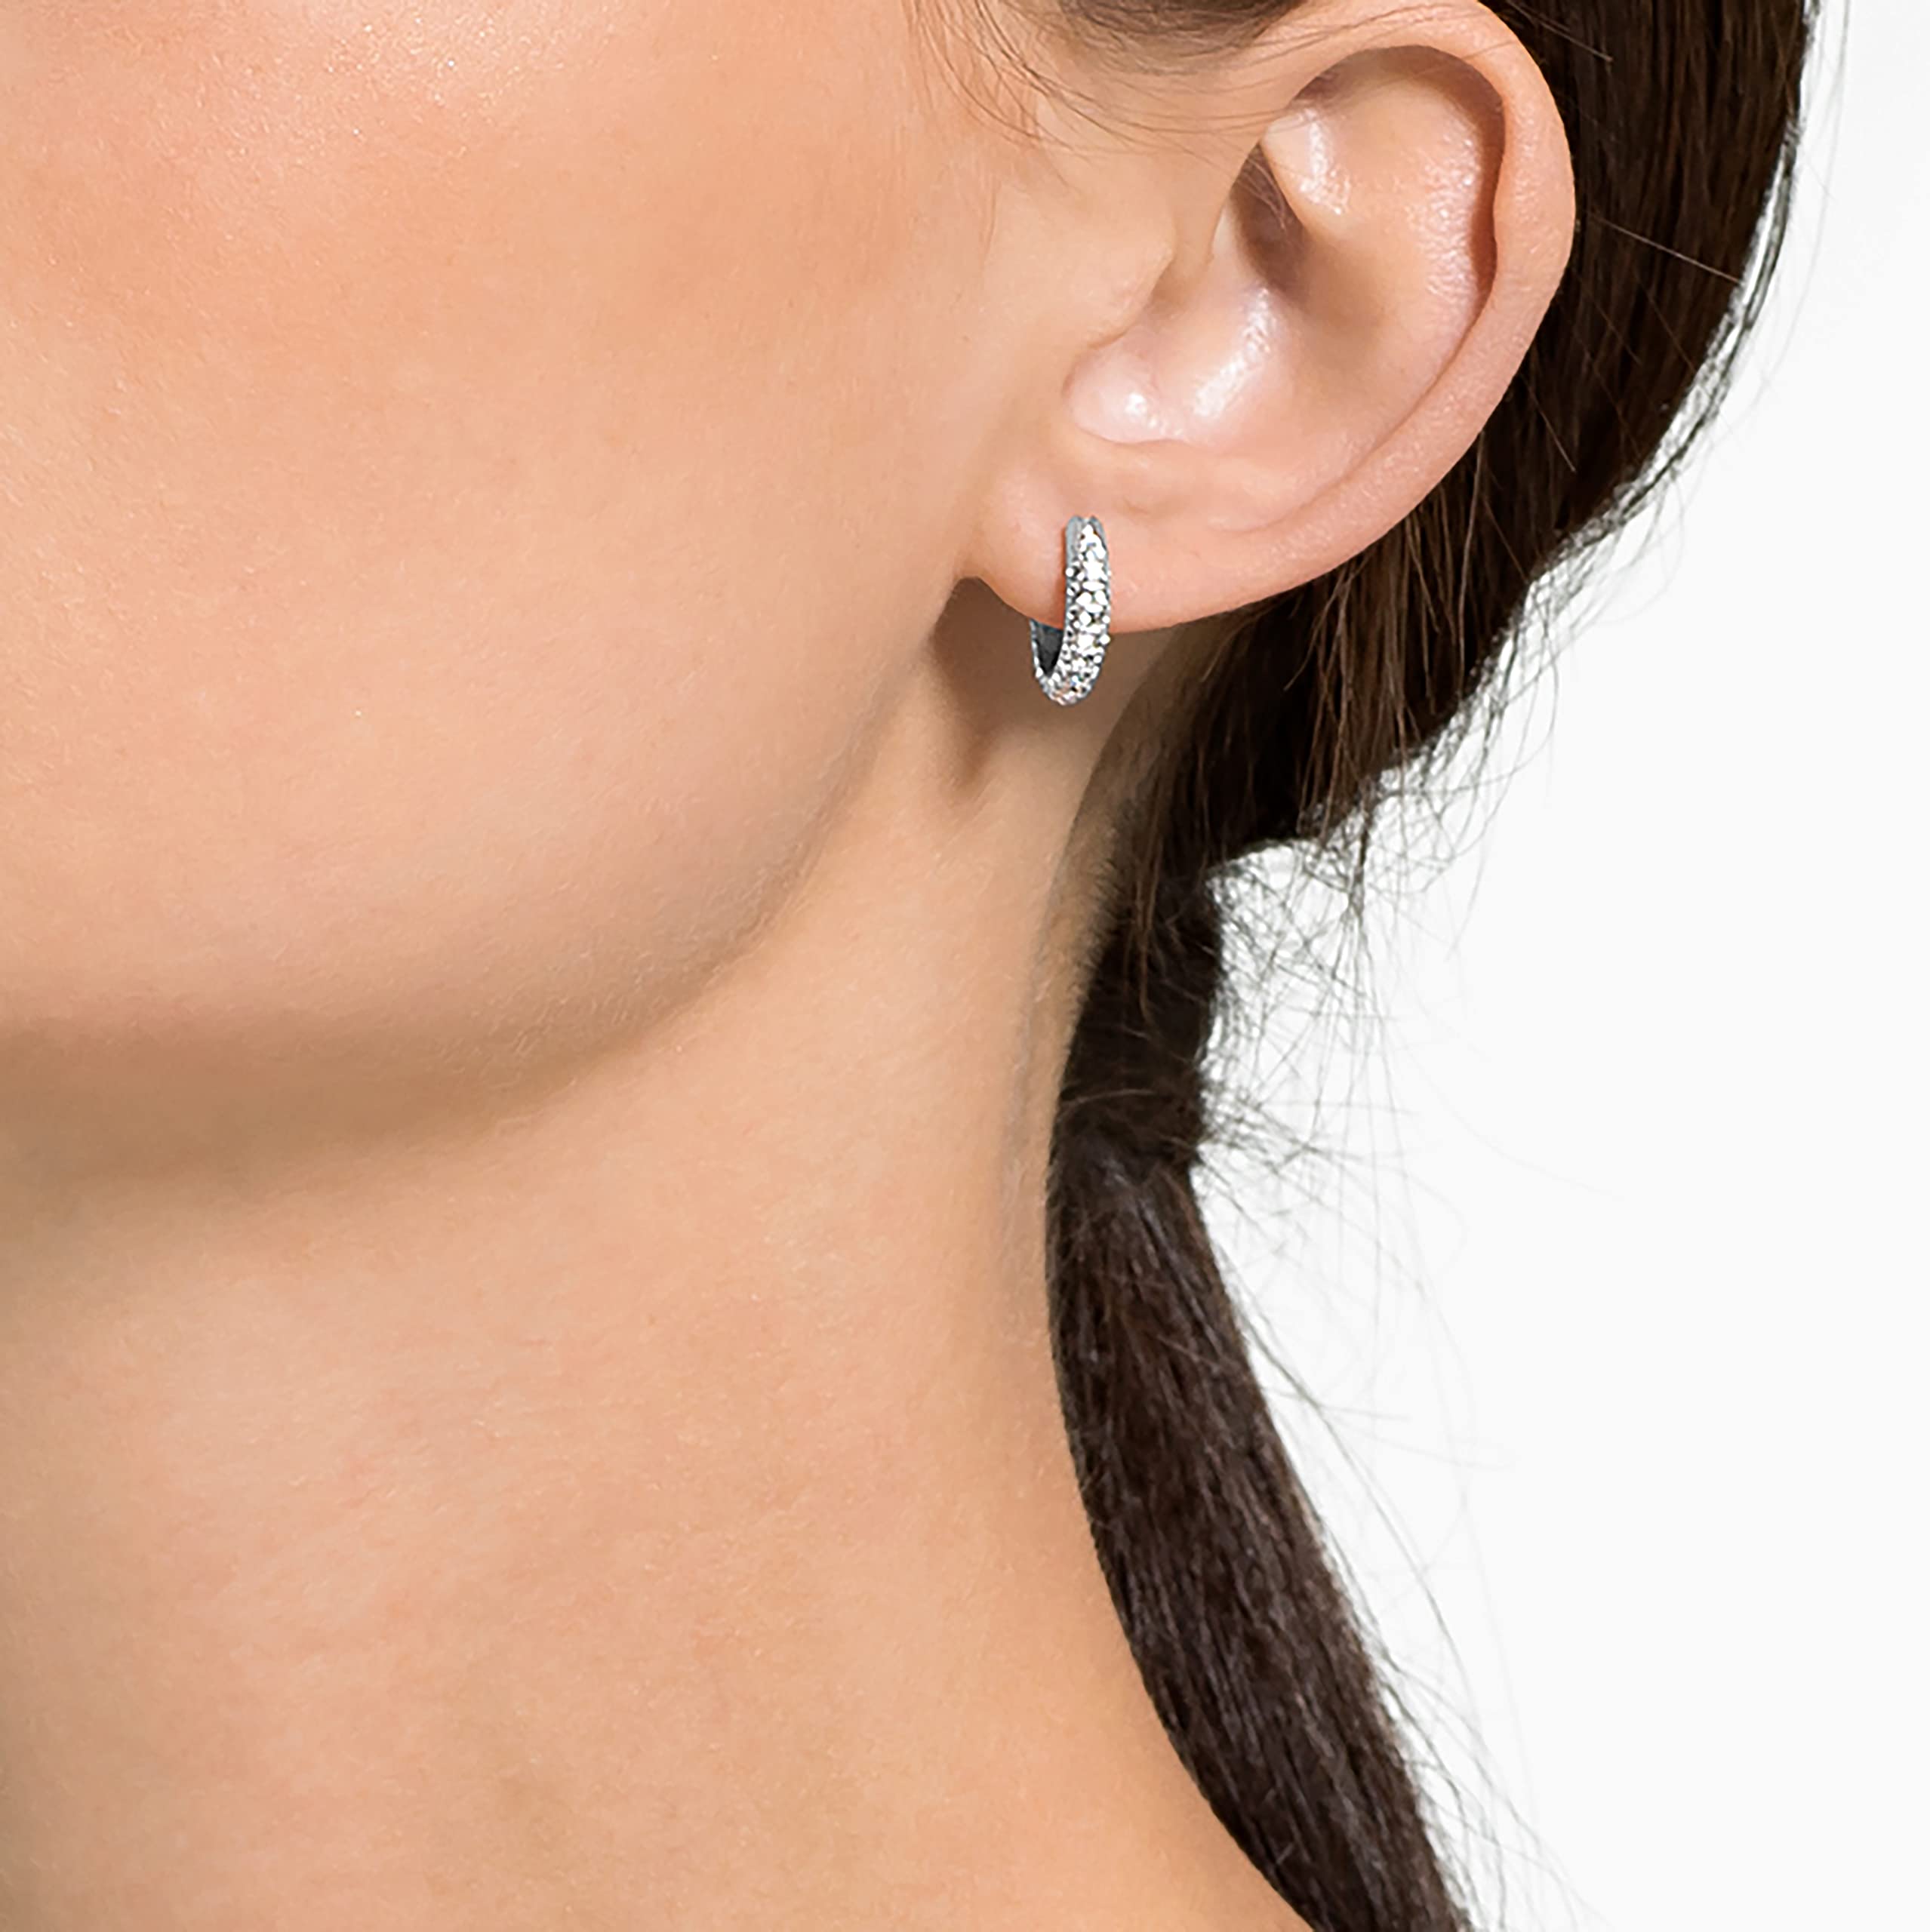 Swarovski Stone Crystal Pierced Hoop Earring Jewelry Collection